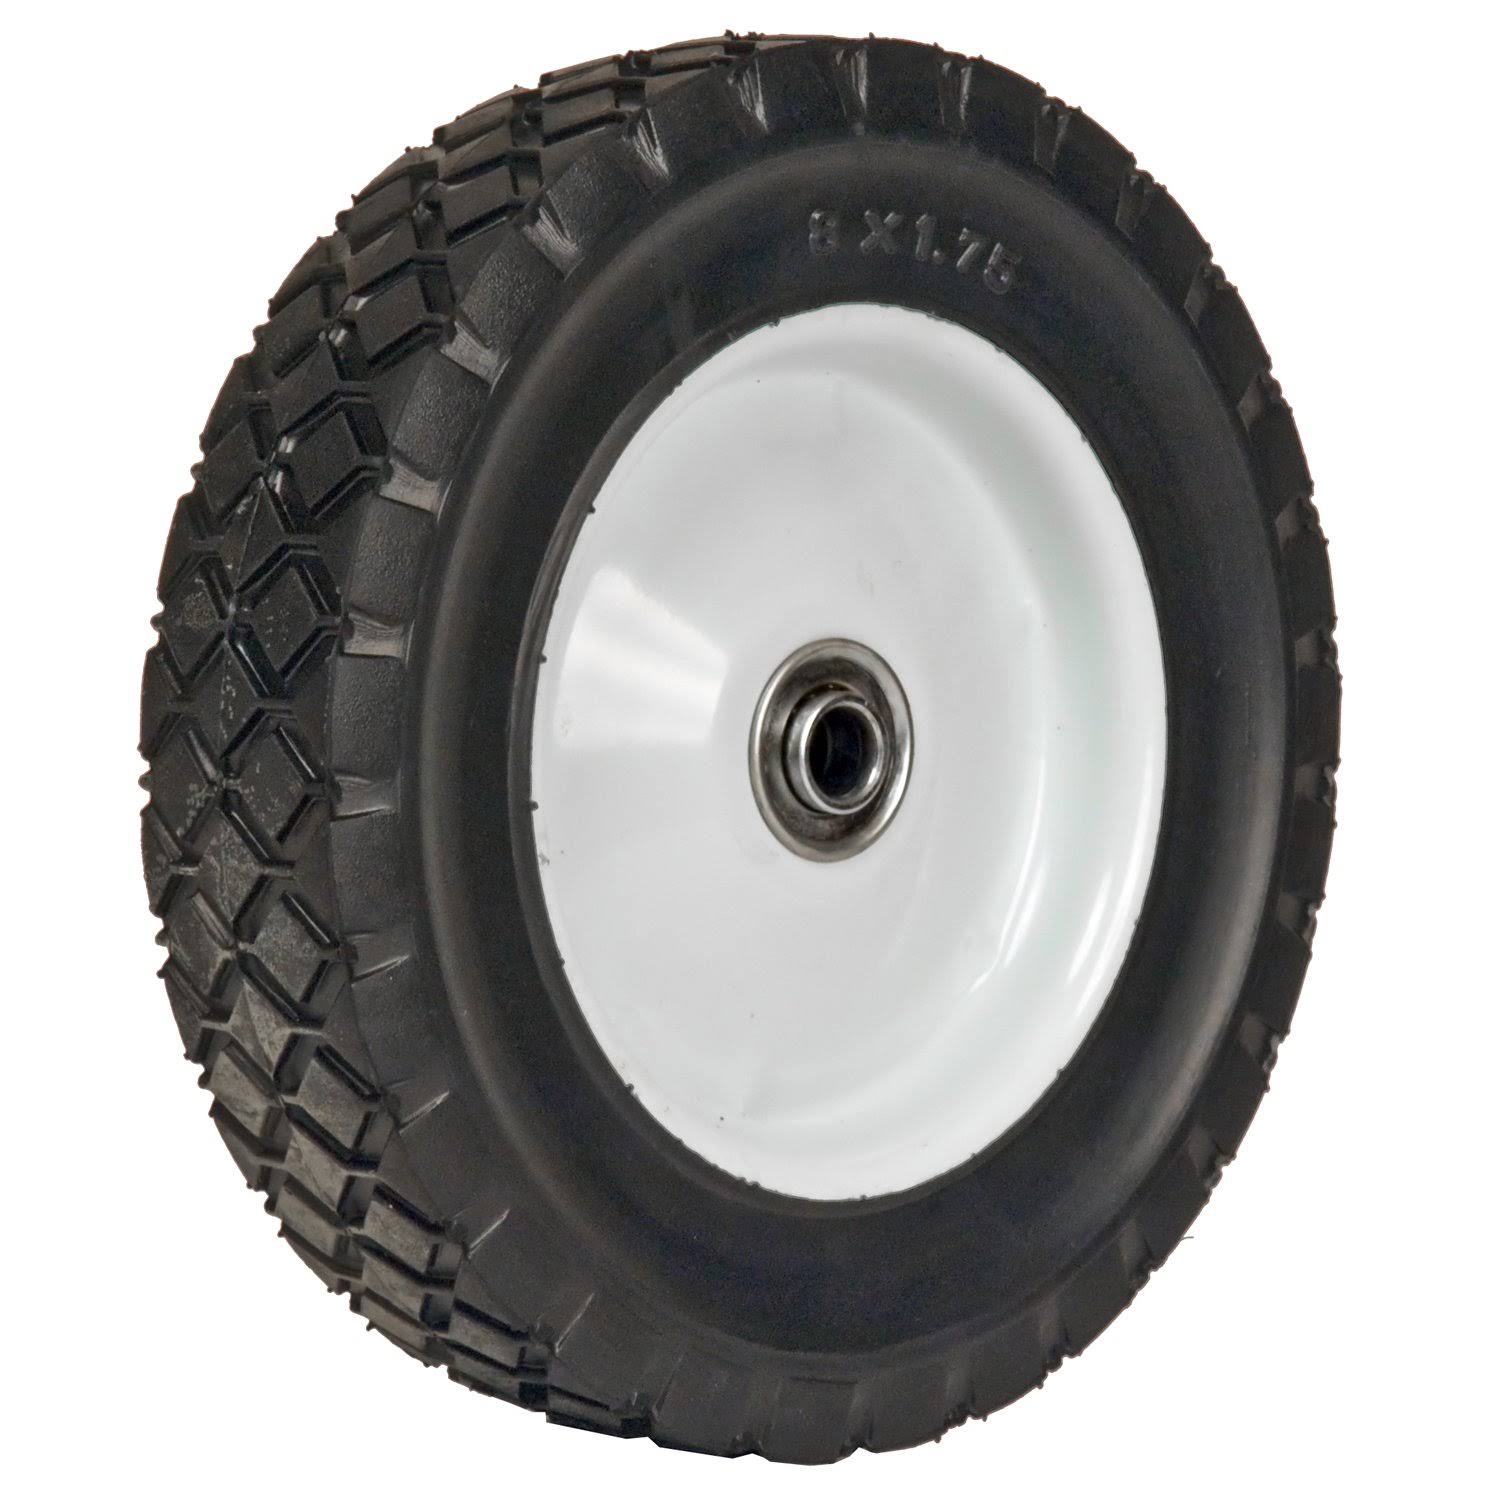 Martin Wheel 875-OF Diamond Tread Steel Wheel - 8"x1 3/4", 60lb Capacity, White Rim